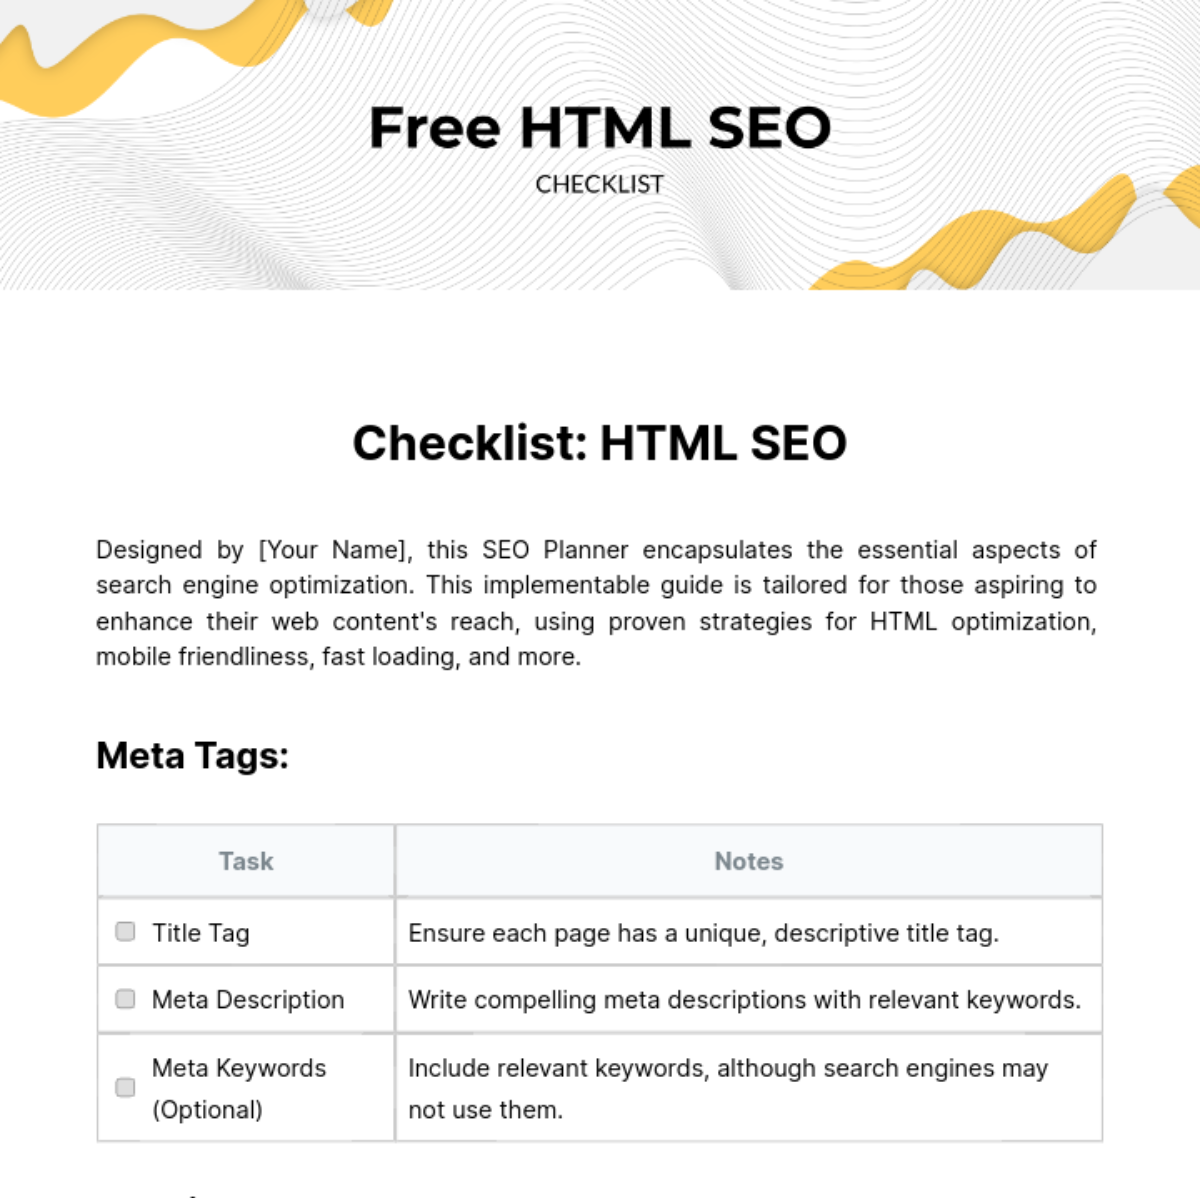 Free HTML SEO Checklist Template